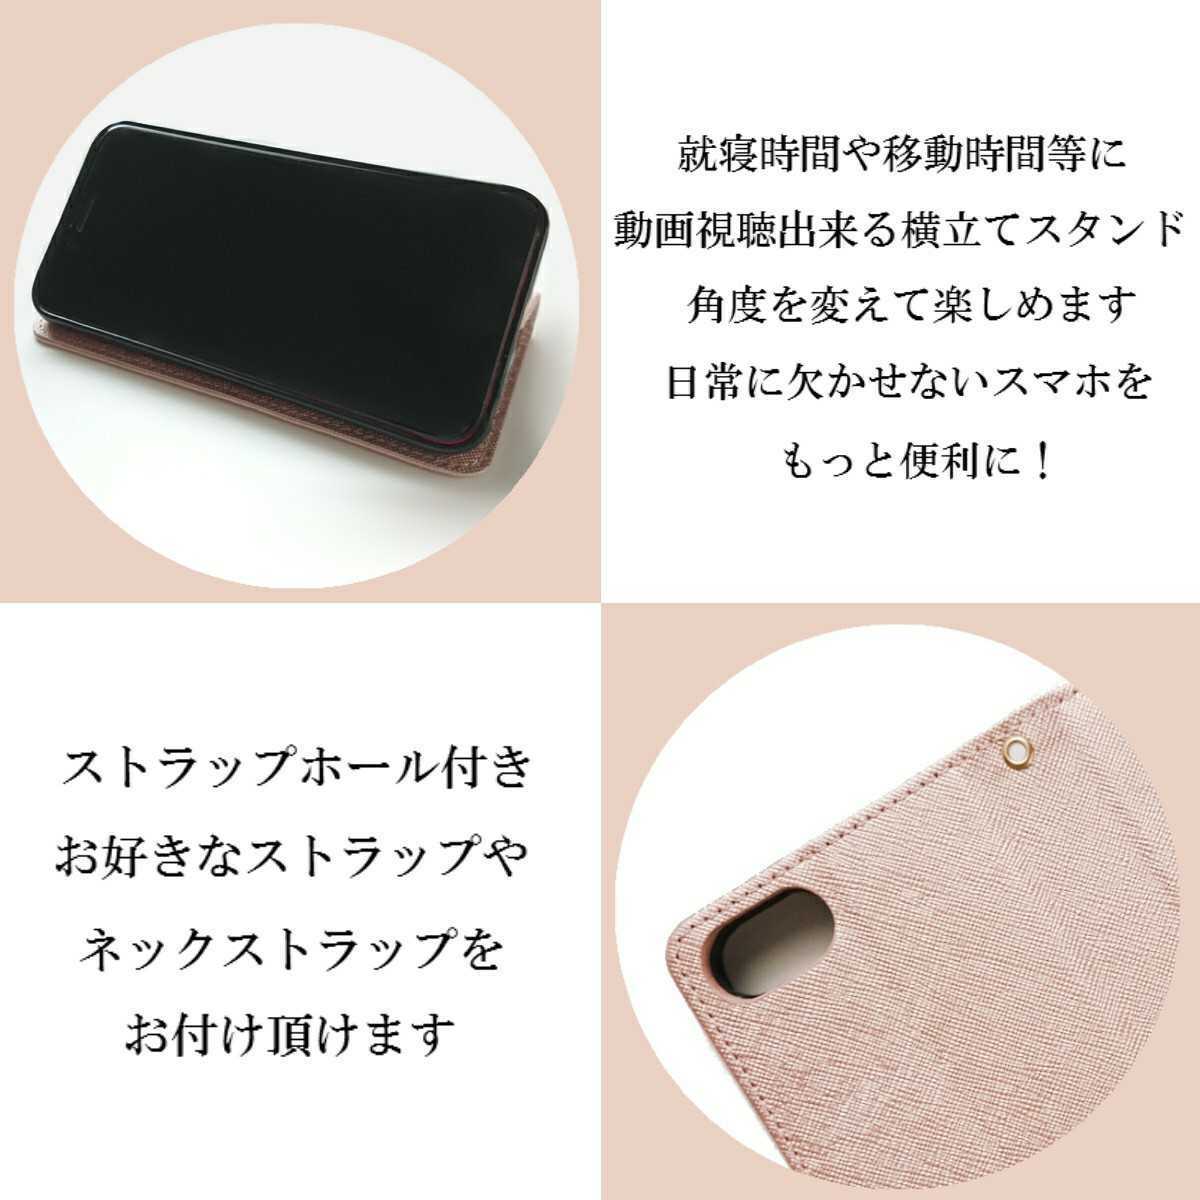 PU кожа блокнот type смартфон кейс (iPhone 11 соответствует )